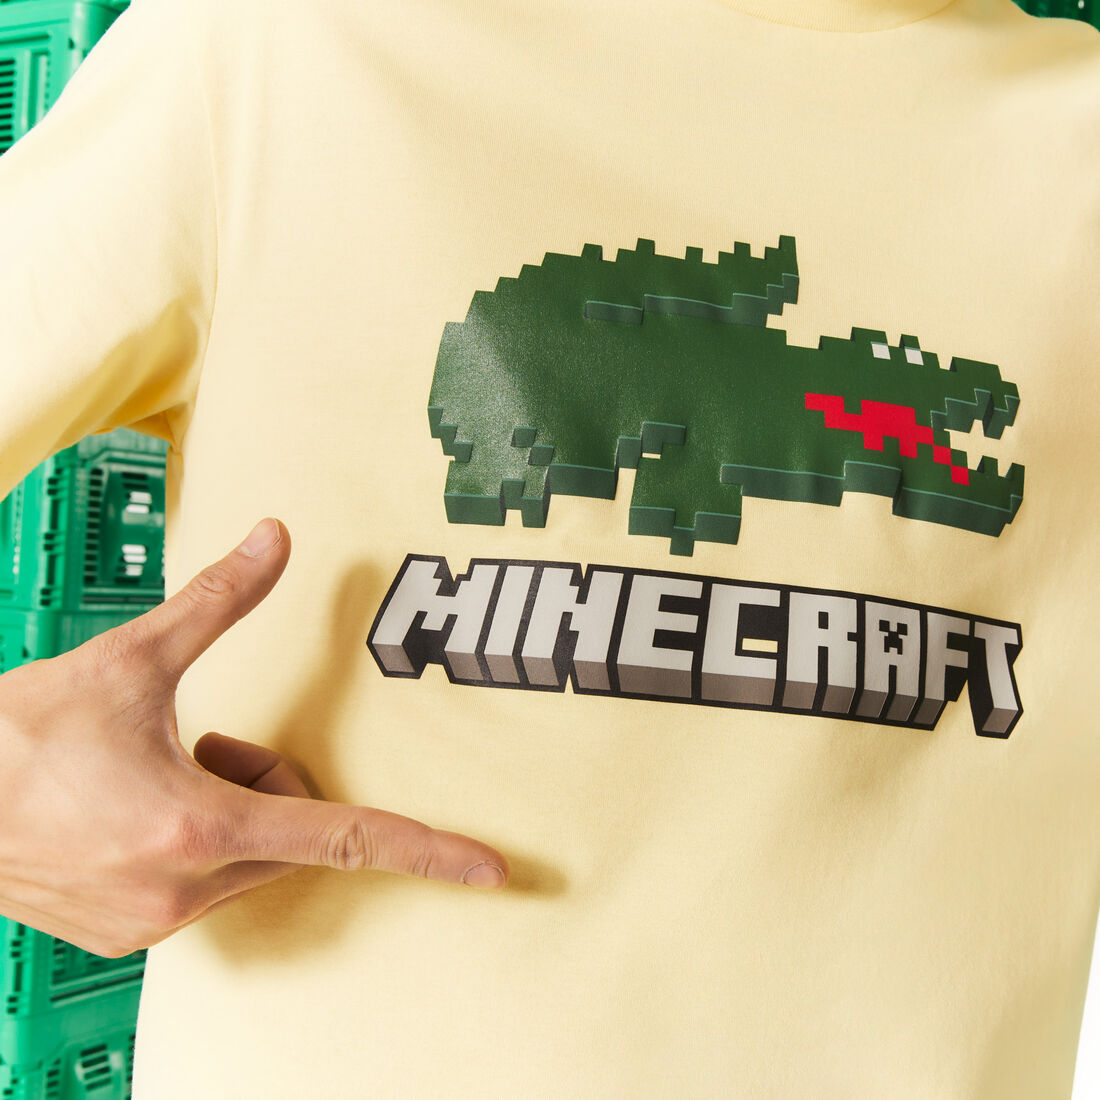 Lacoste X Minecraft Print Organic Baumwoll T-shirts Herren Gelb | ZHGJ-95206